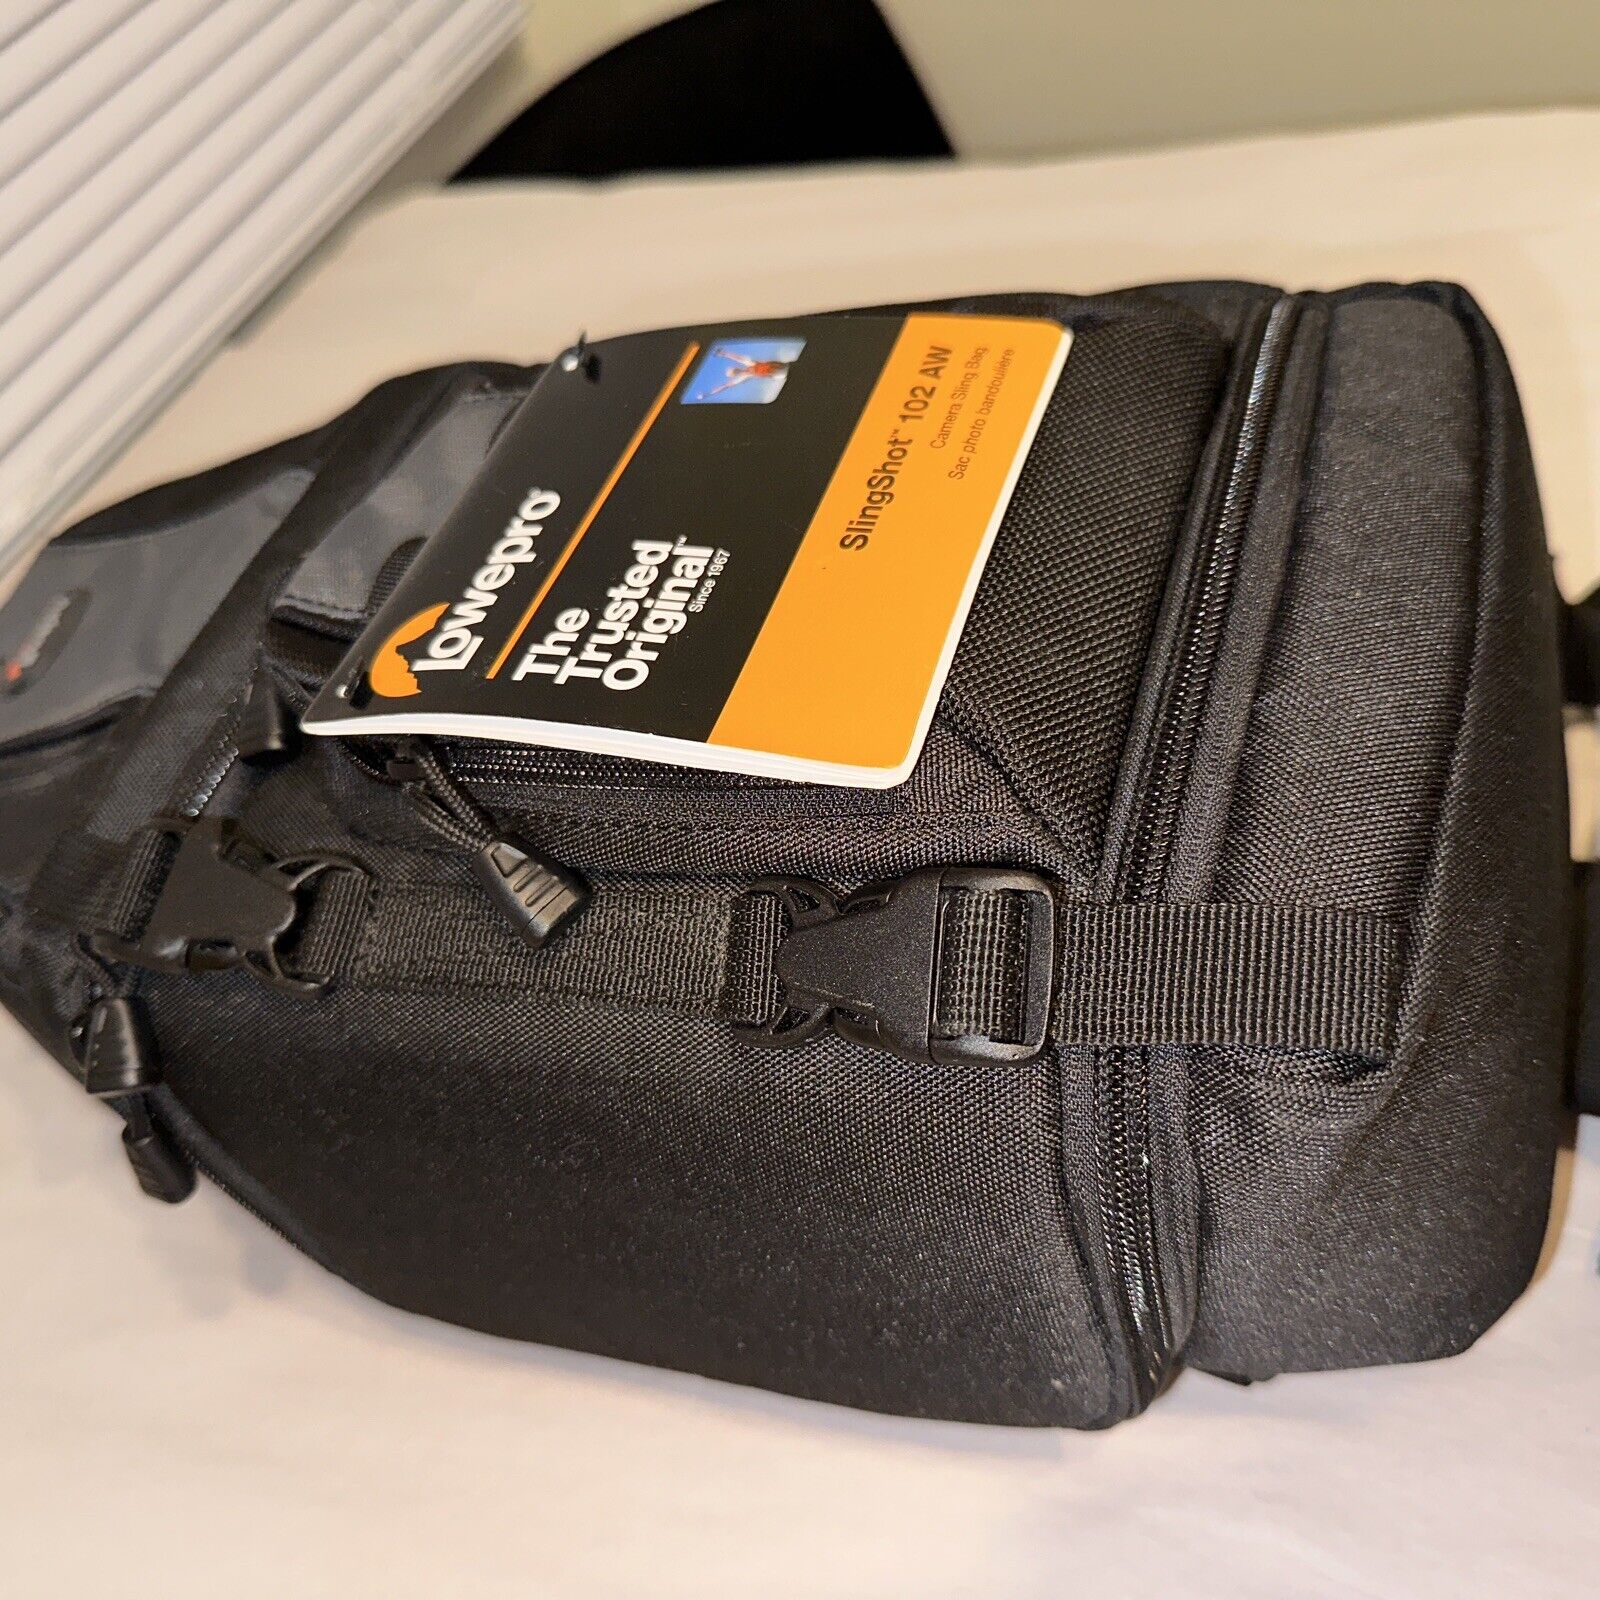 Drone Photography Sling Bag Backpack - Lowepro Slingshot 102 AW